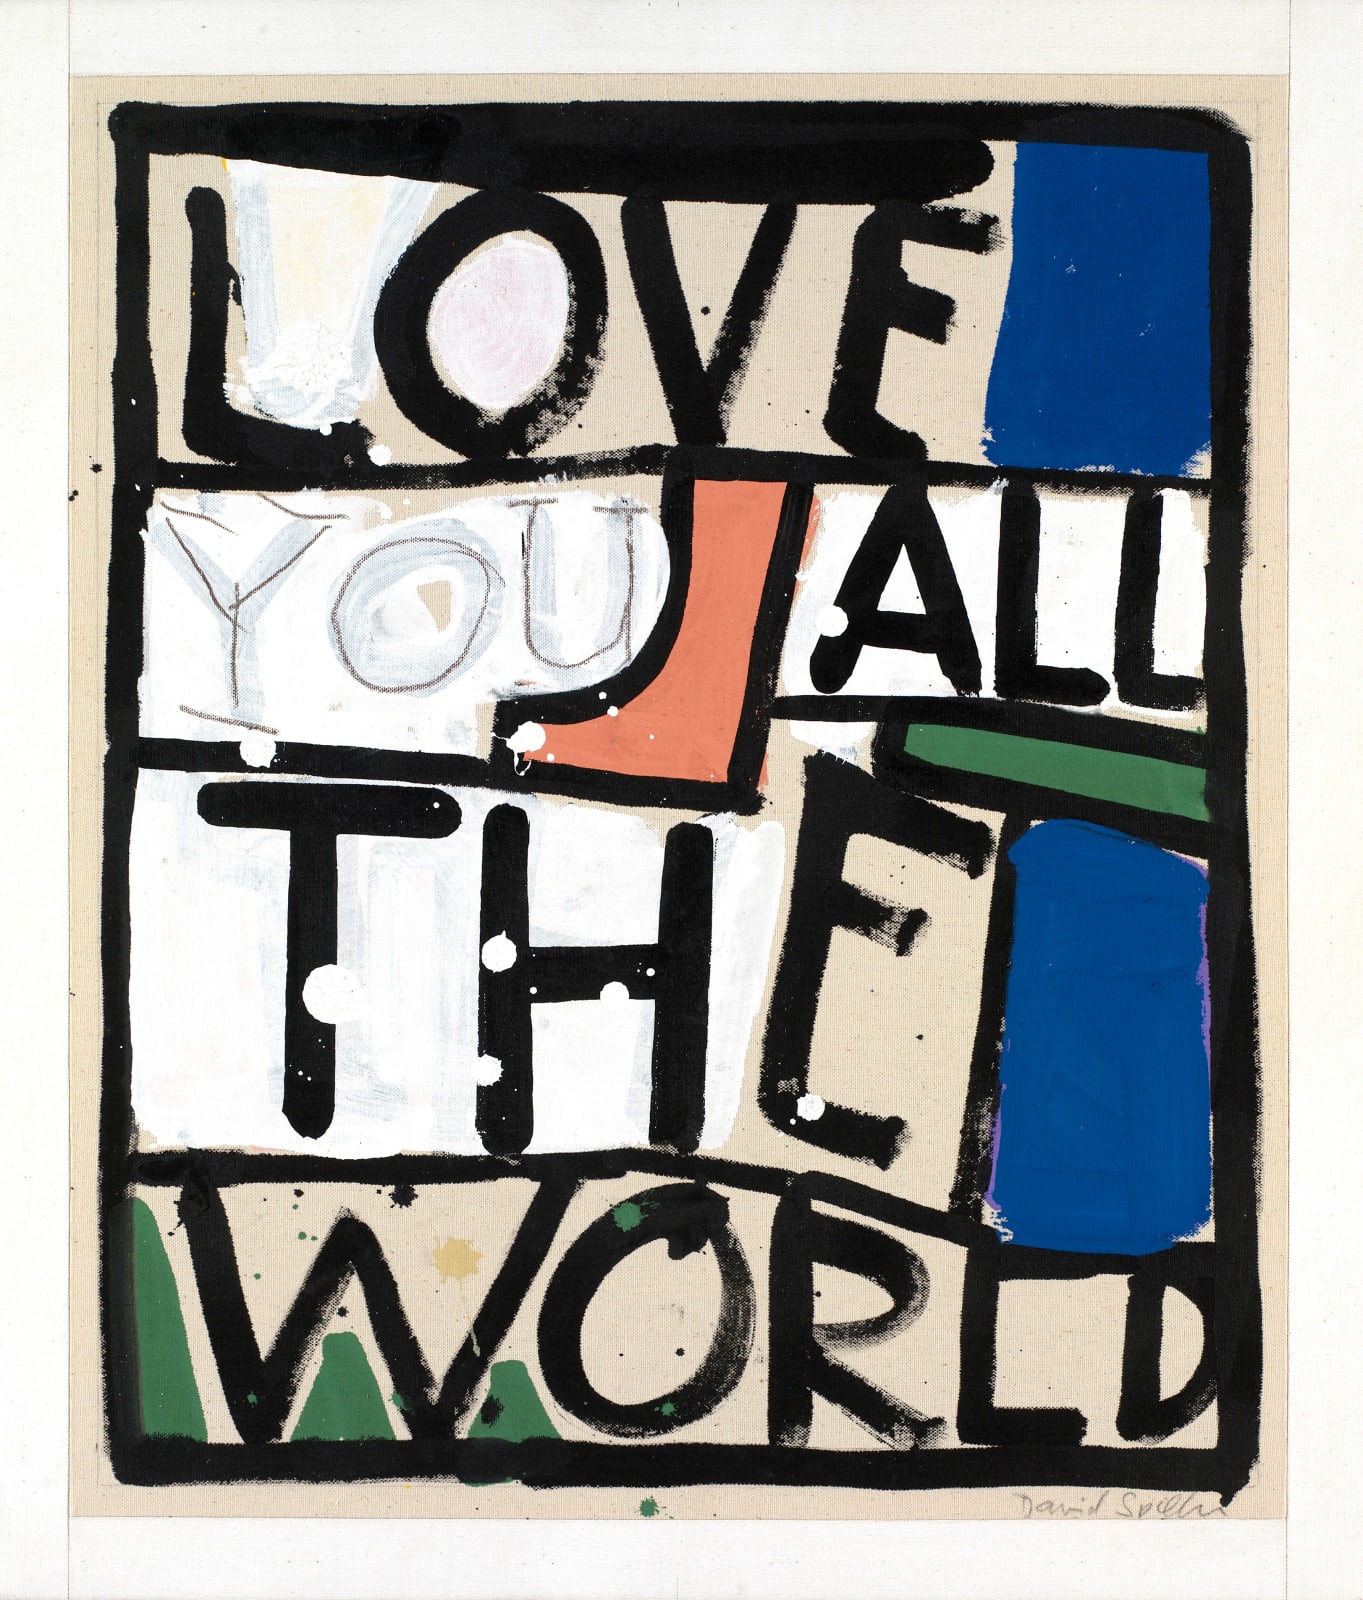 David Spiller, Love You All the World, 2009